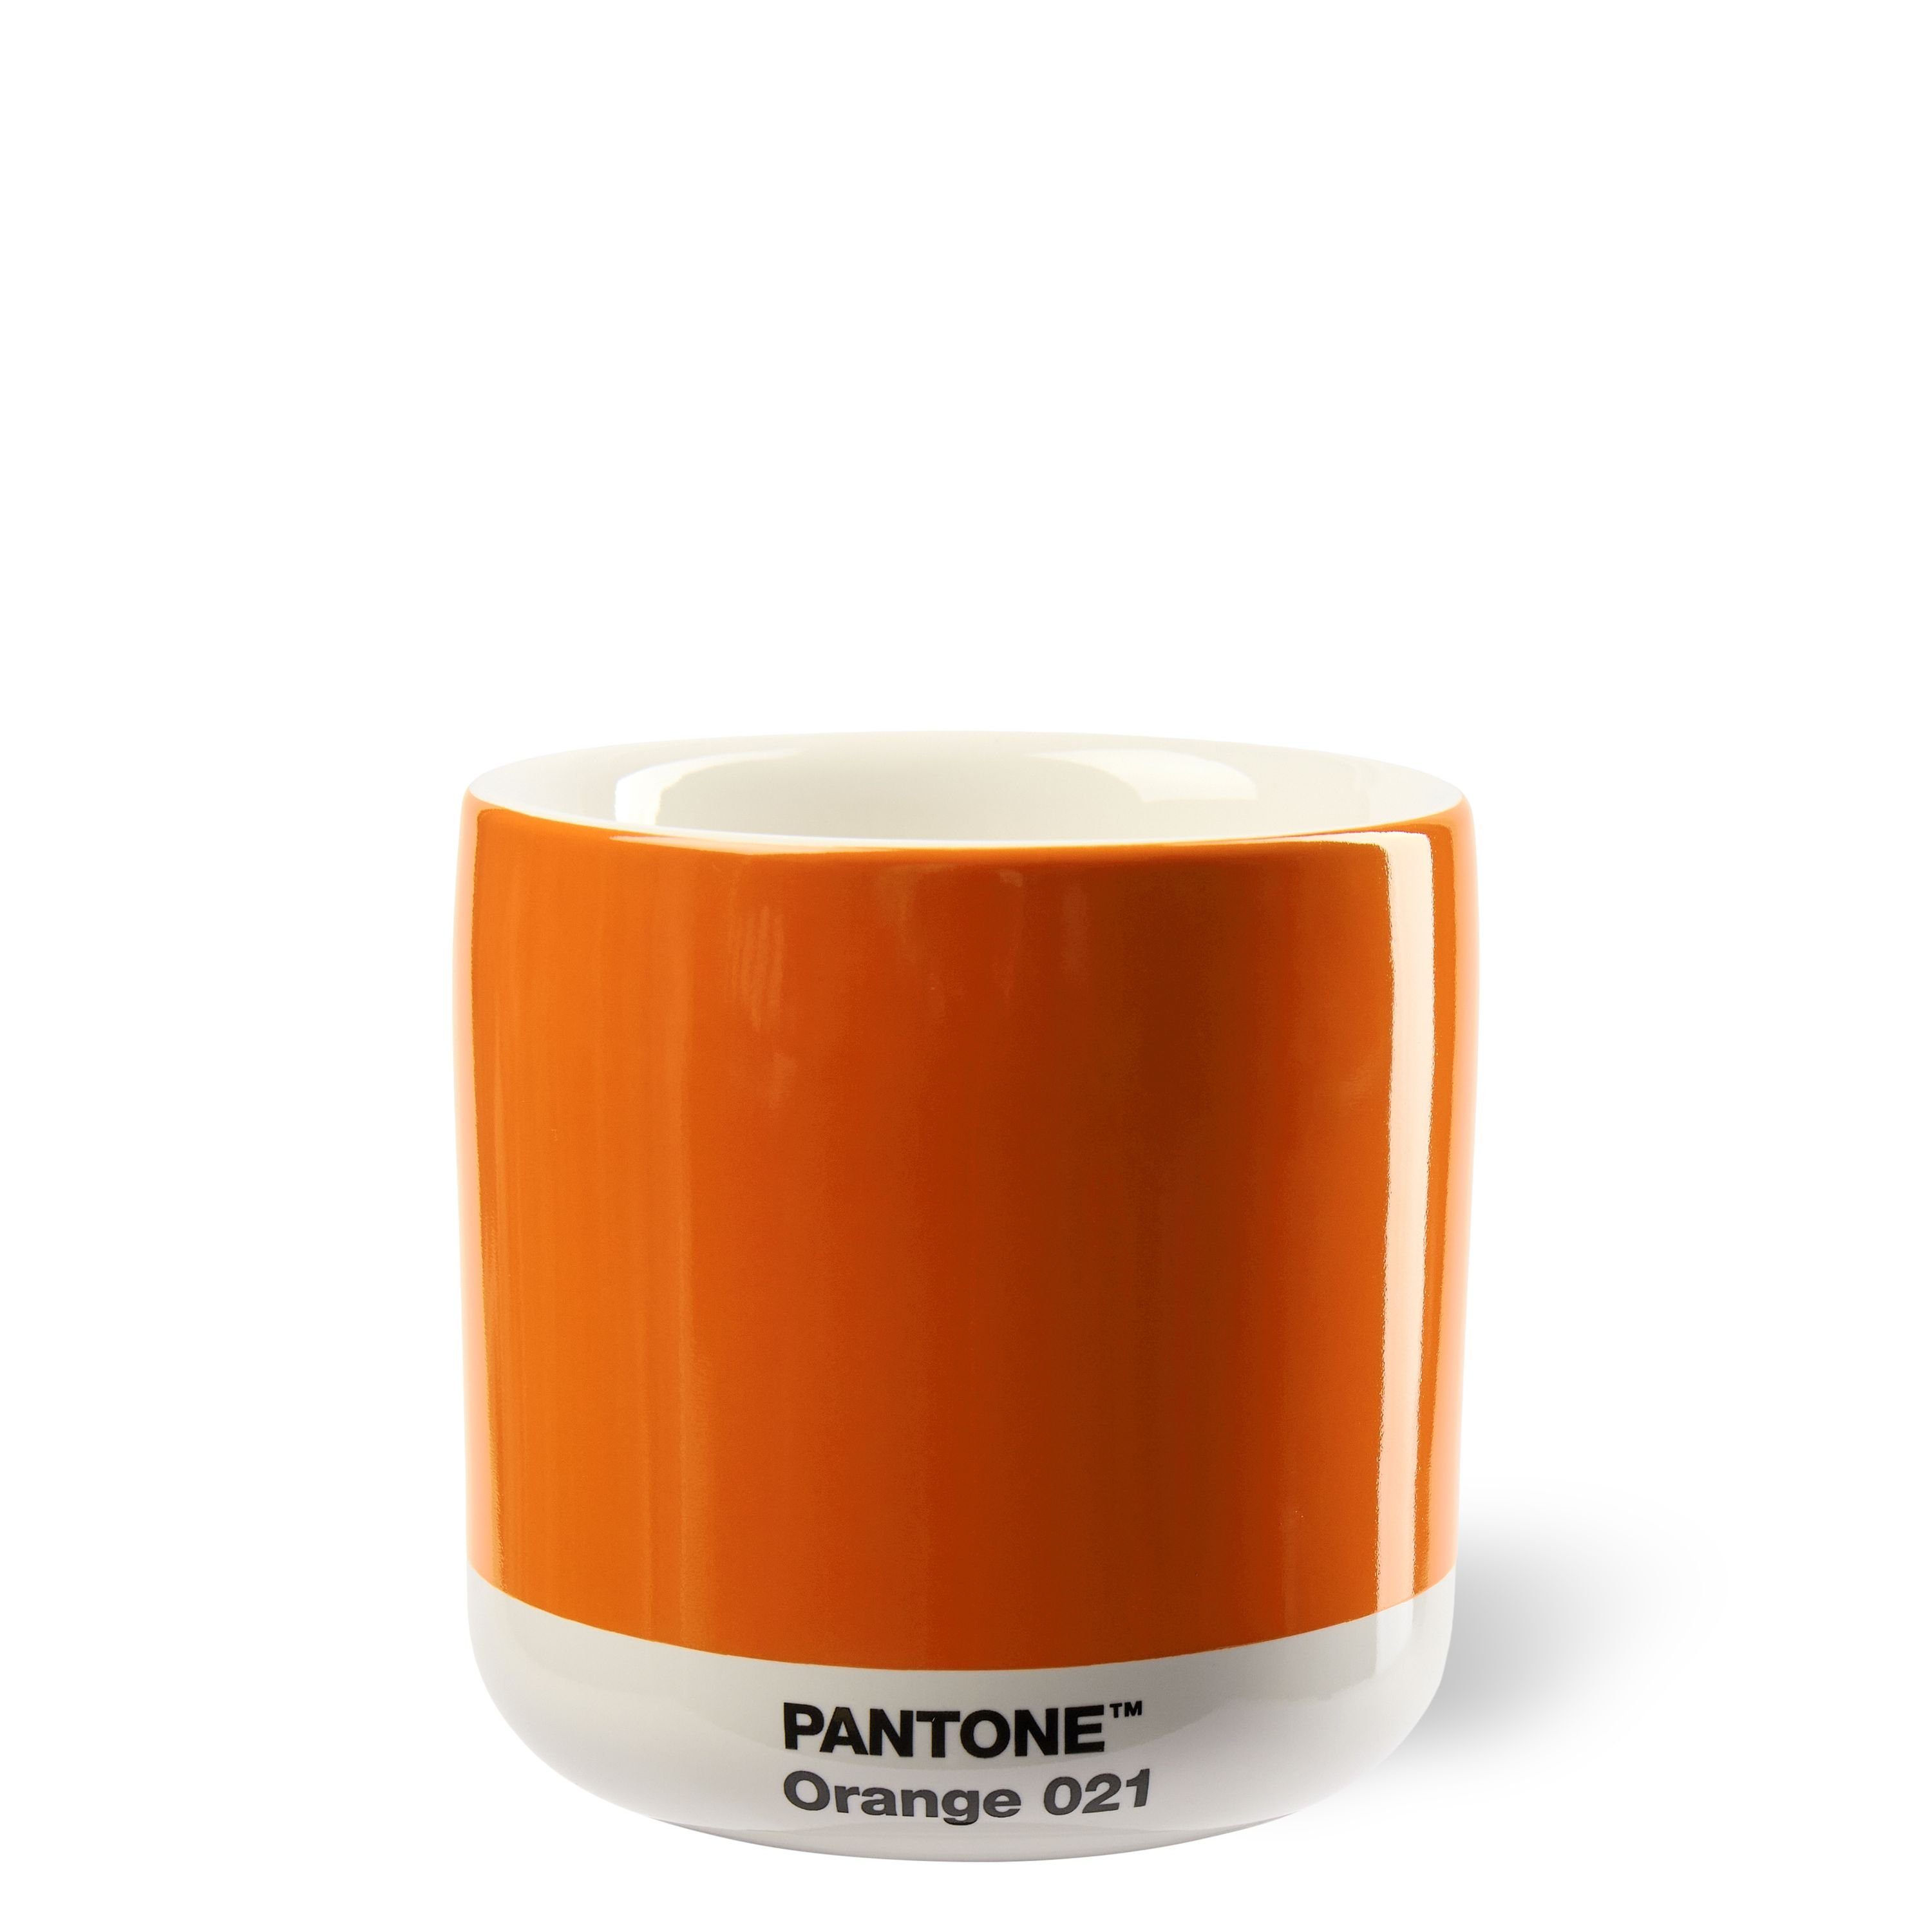 PANTONE Kaffeeservice, PANTONE Porzellan Thermobecher Latte Macchiato, 220 ml Orange 021 C